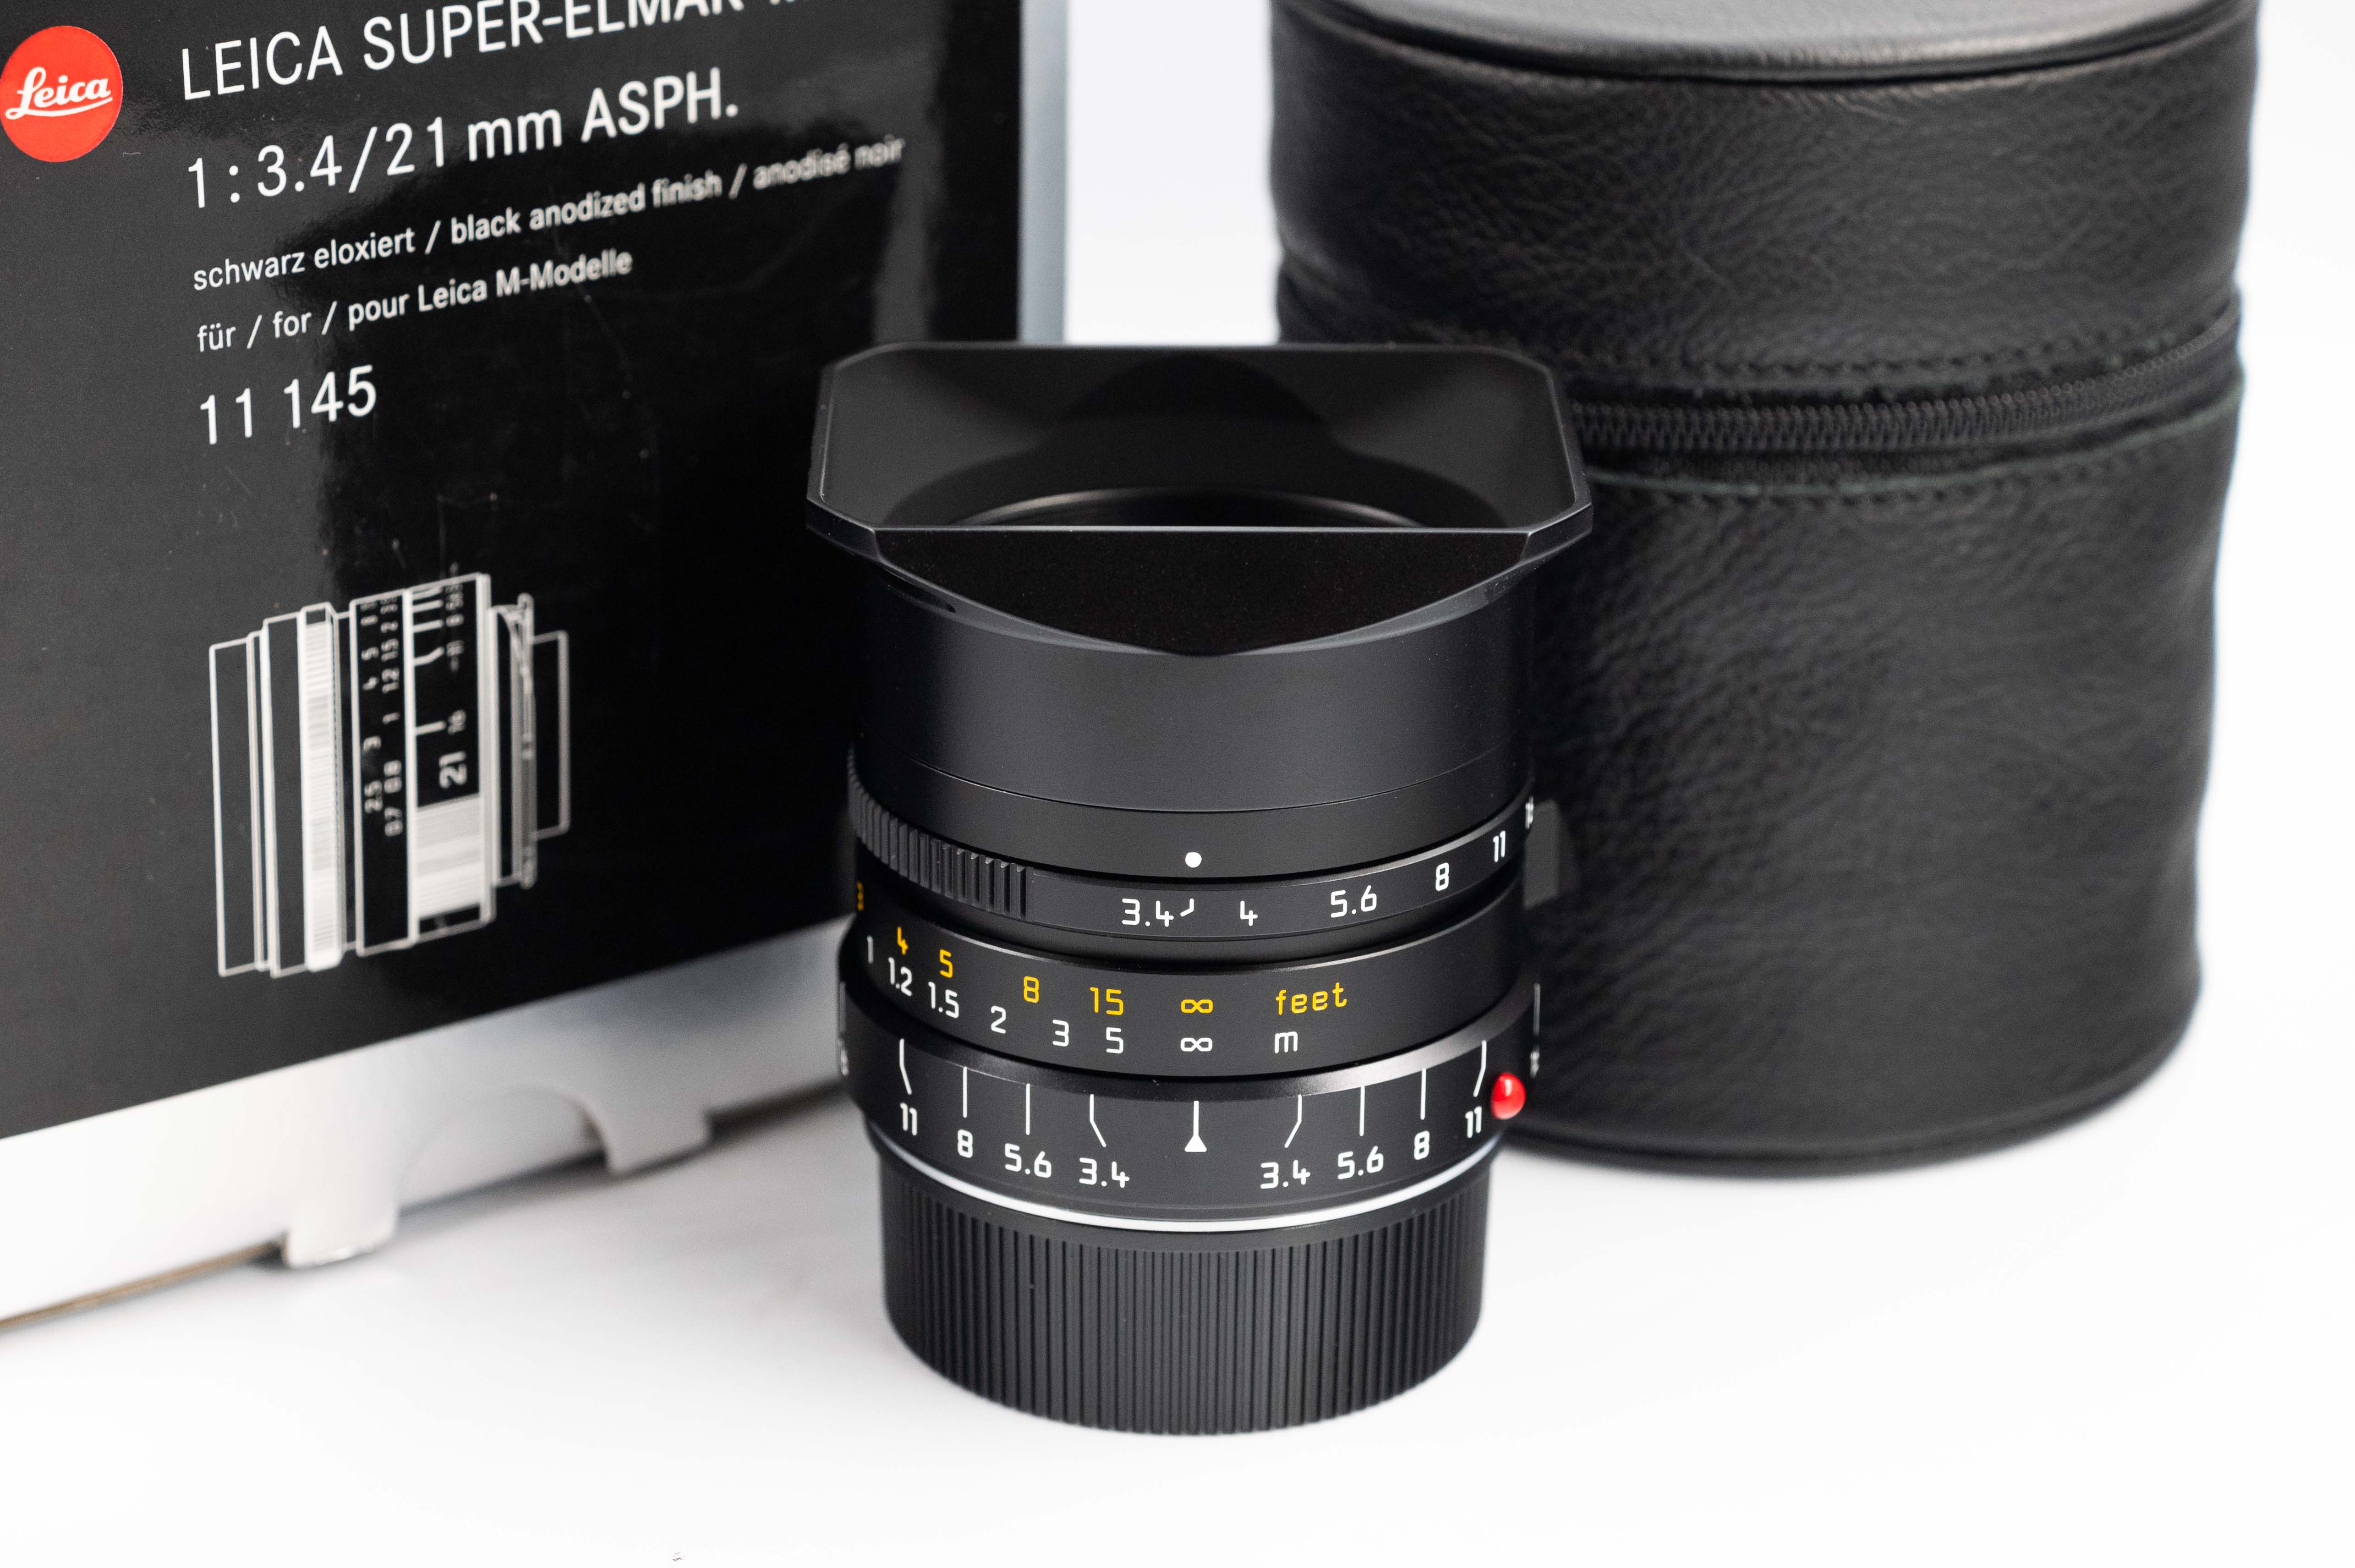 Leica Super-Elmar-M 21mm f/3.4 ASPH 11145